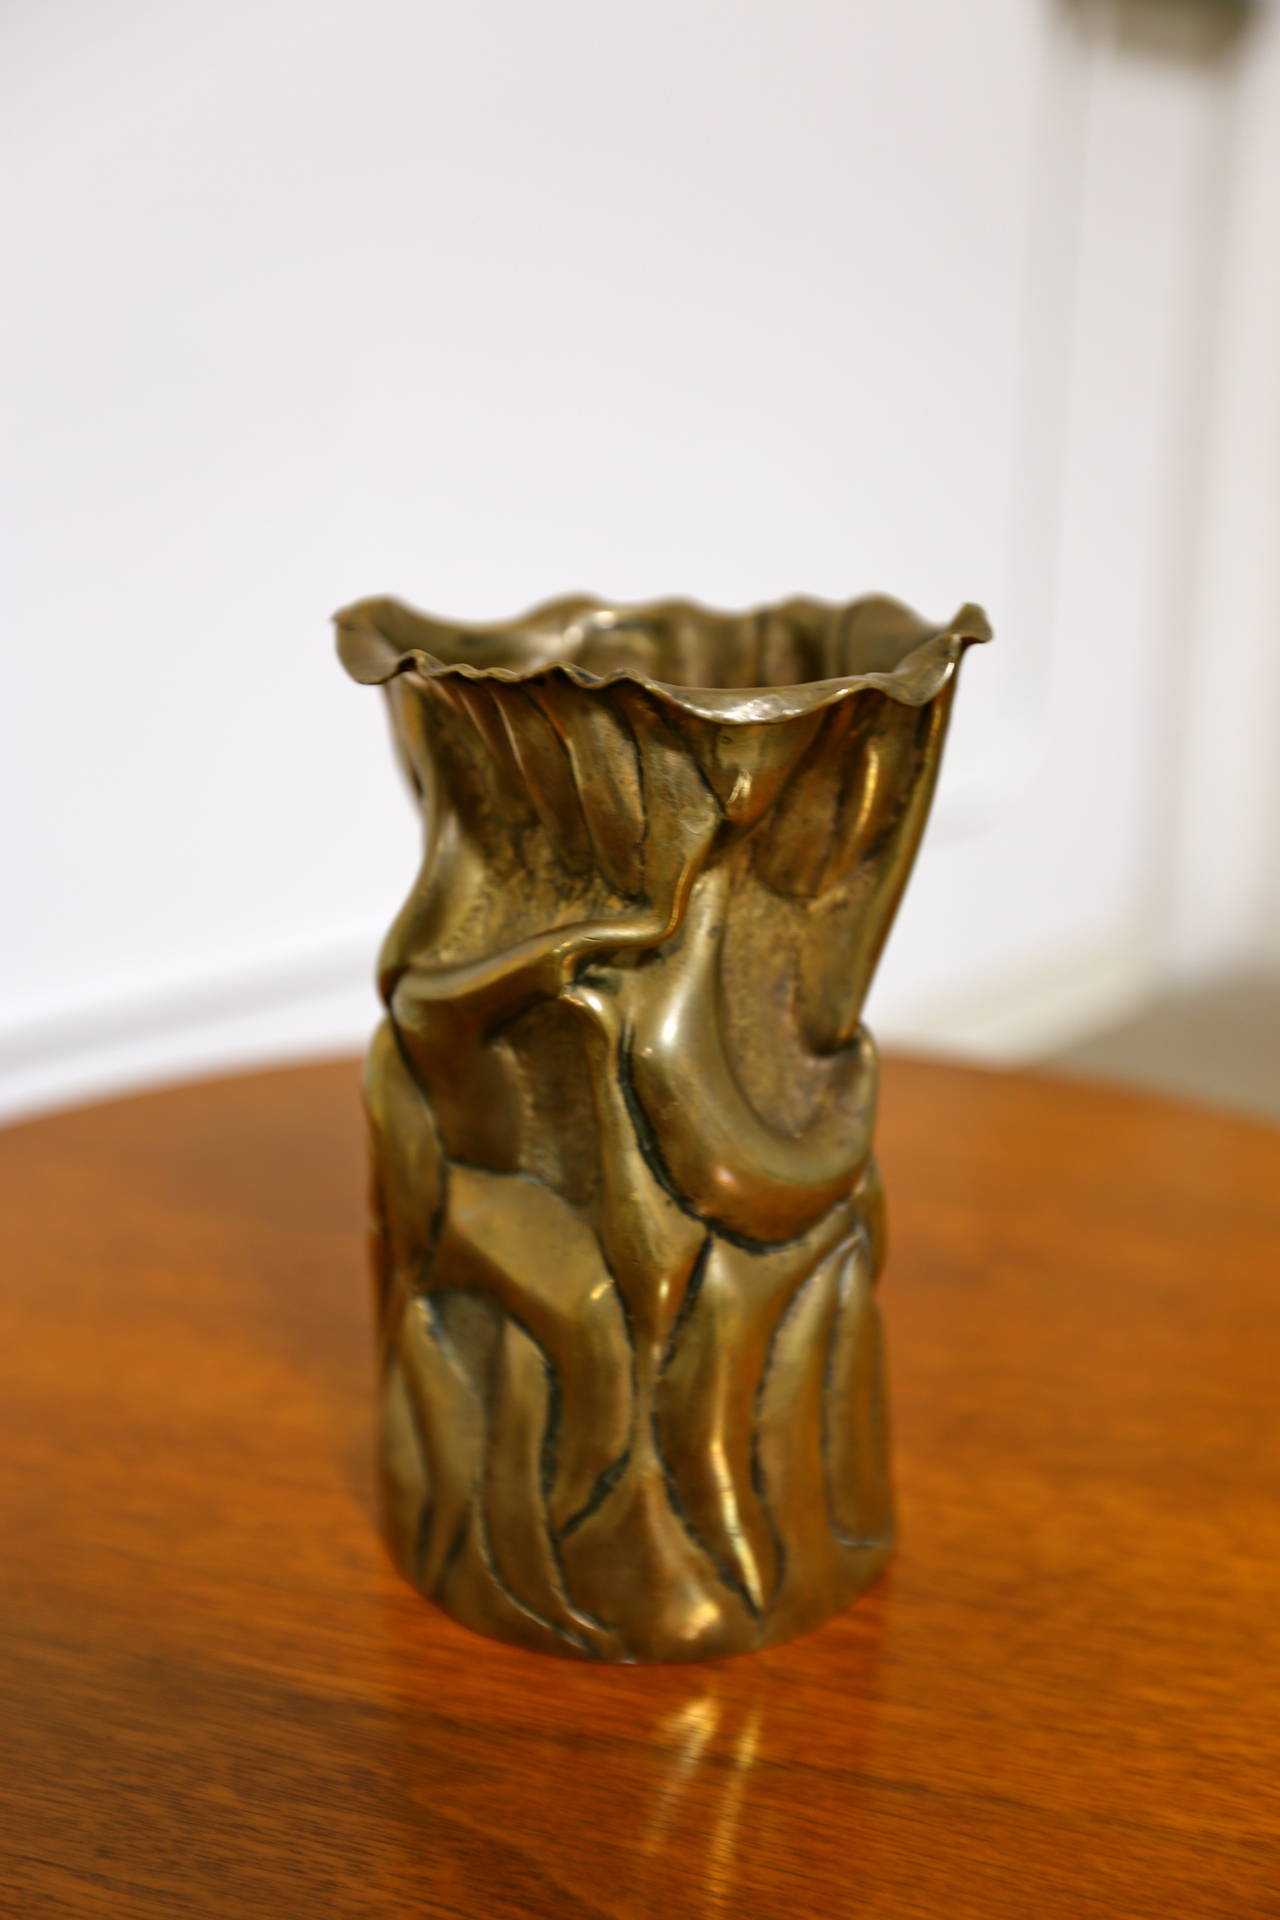 Brutalist sculptural brass vessel by Willian D. Chuchwar.